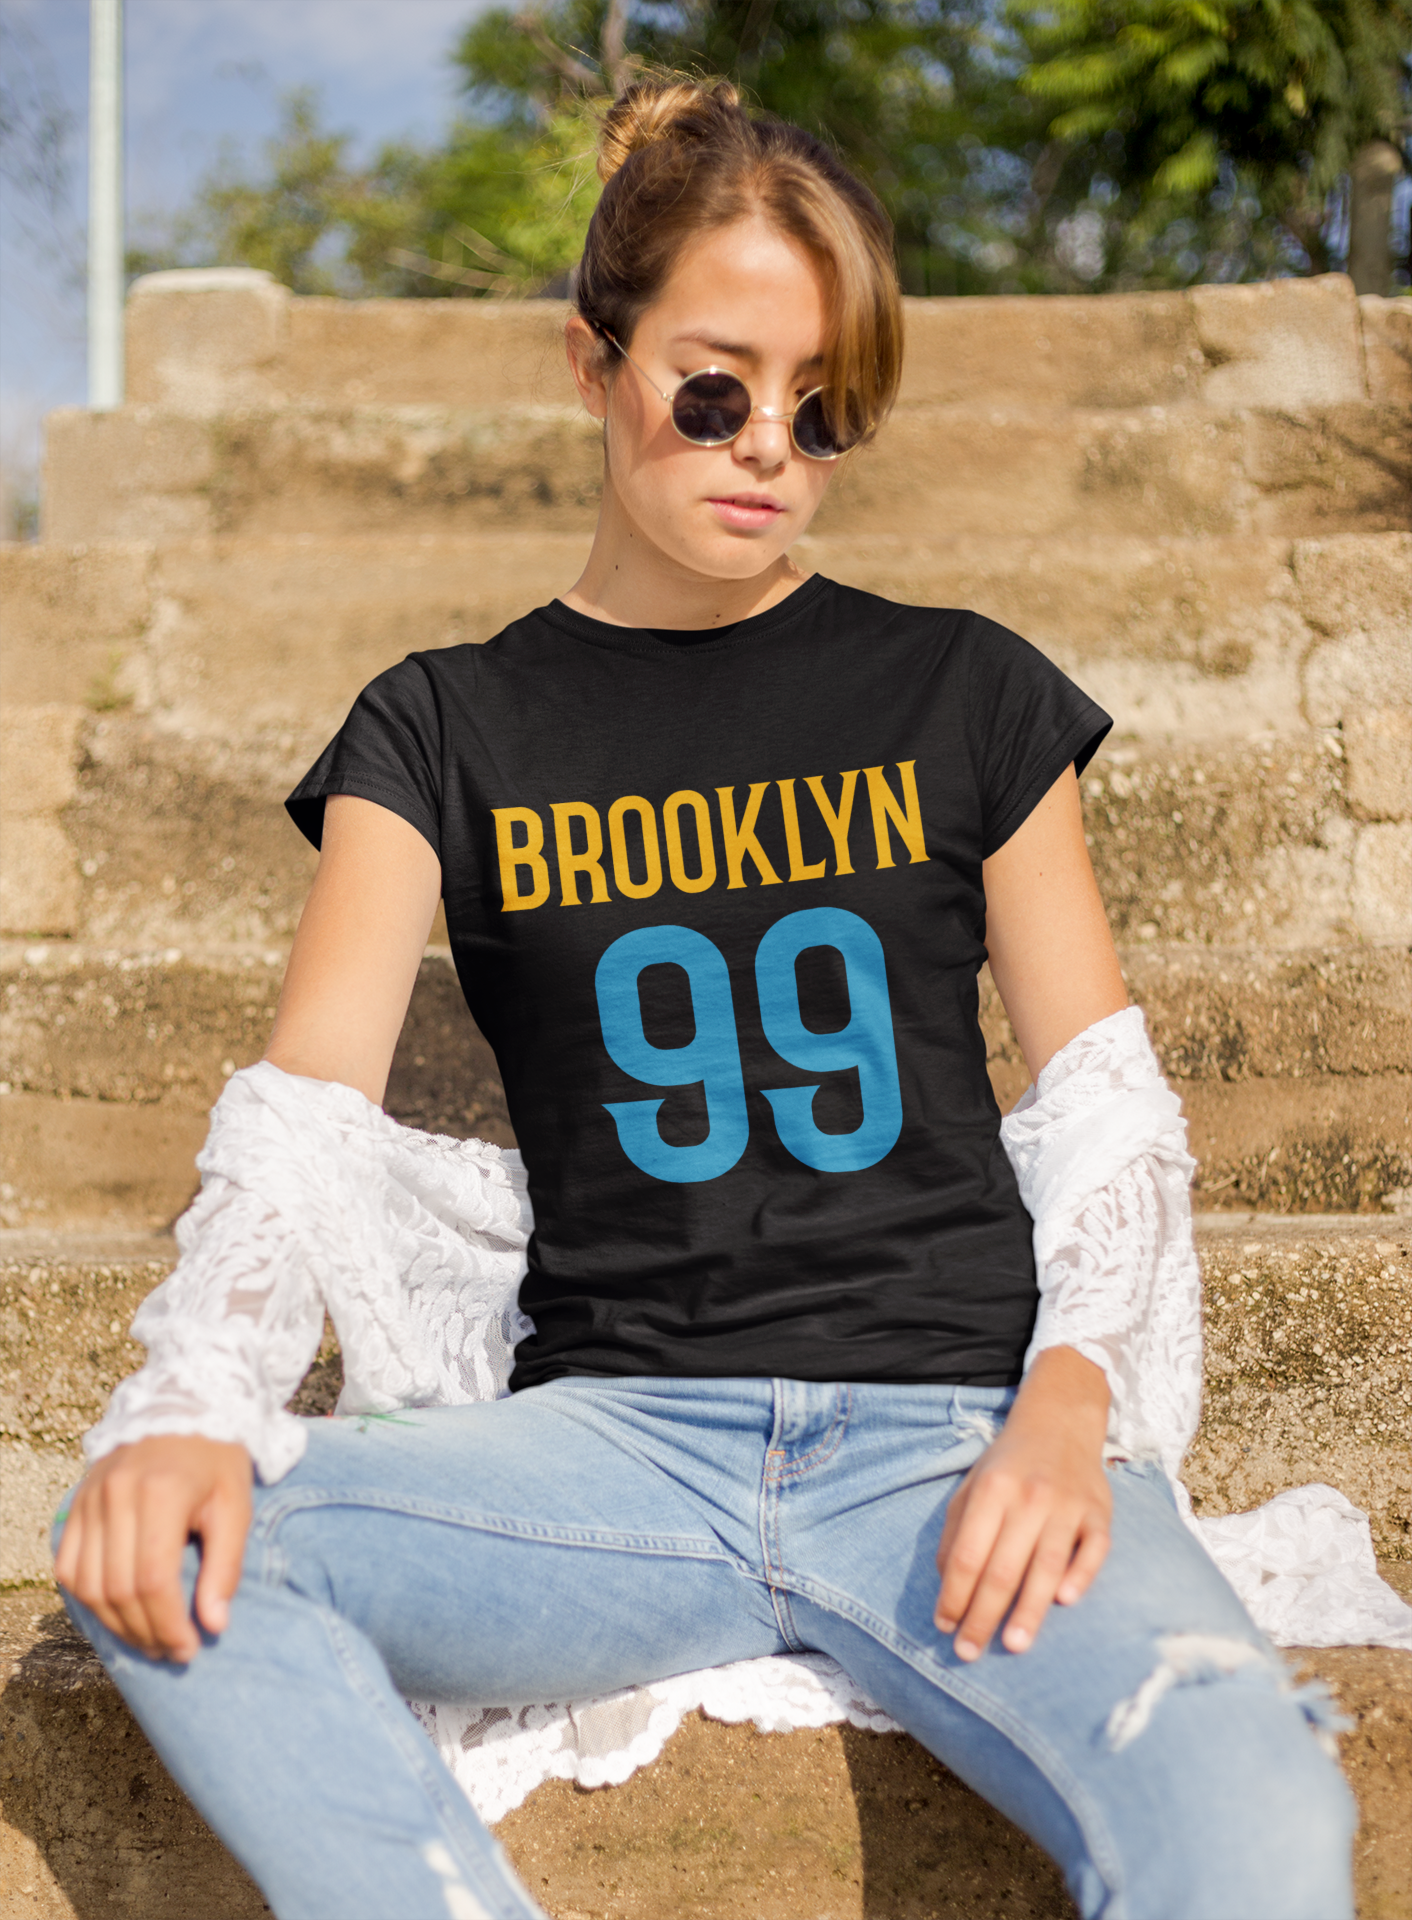 Brooklyn 99 Black Round Neck T-Shirt for Women. 